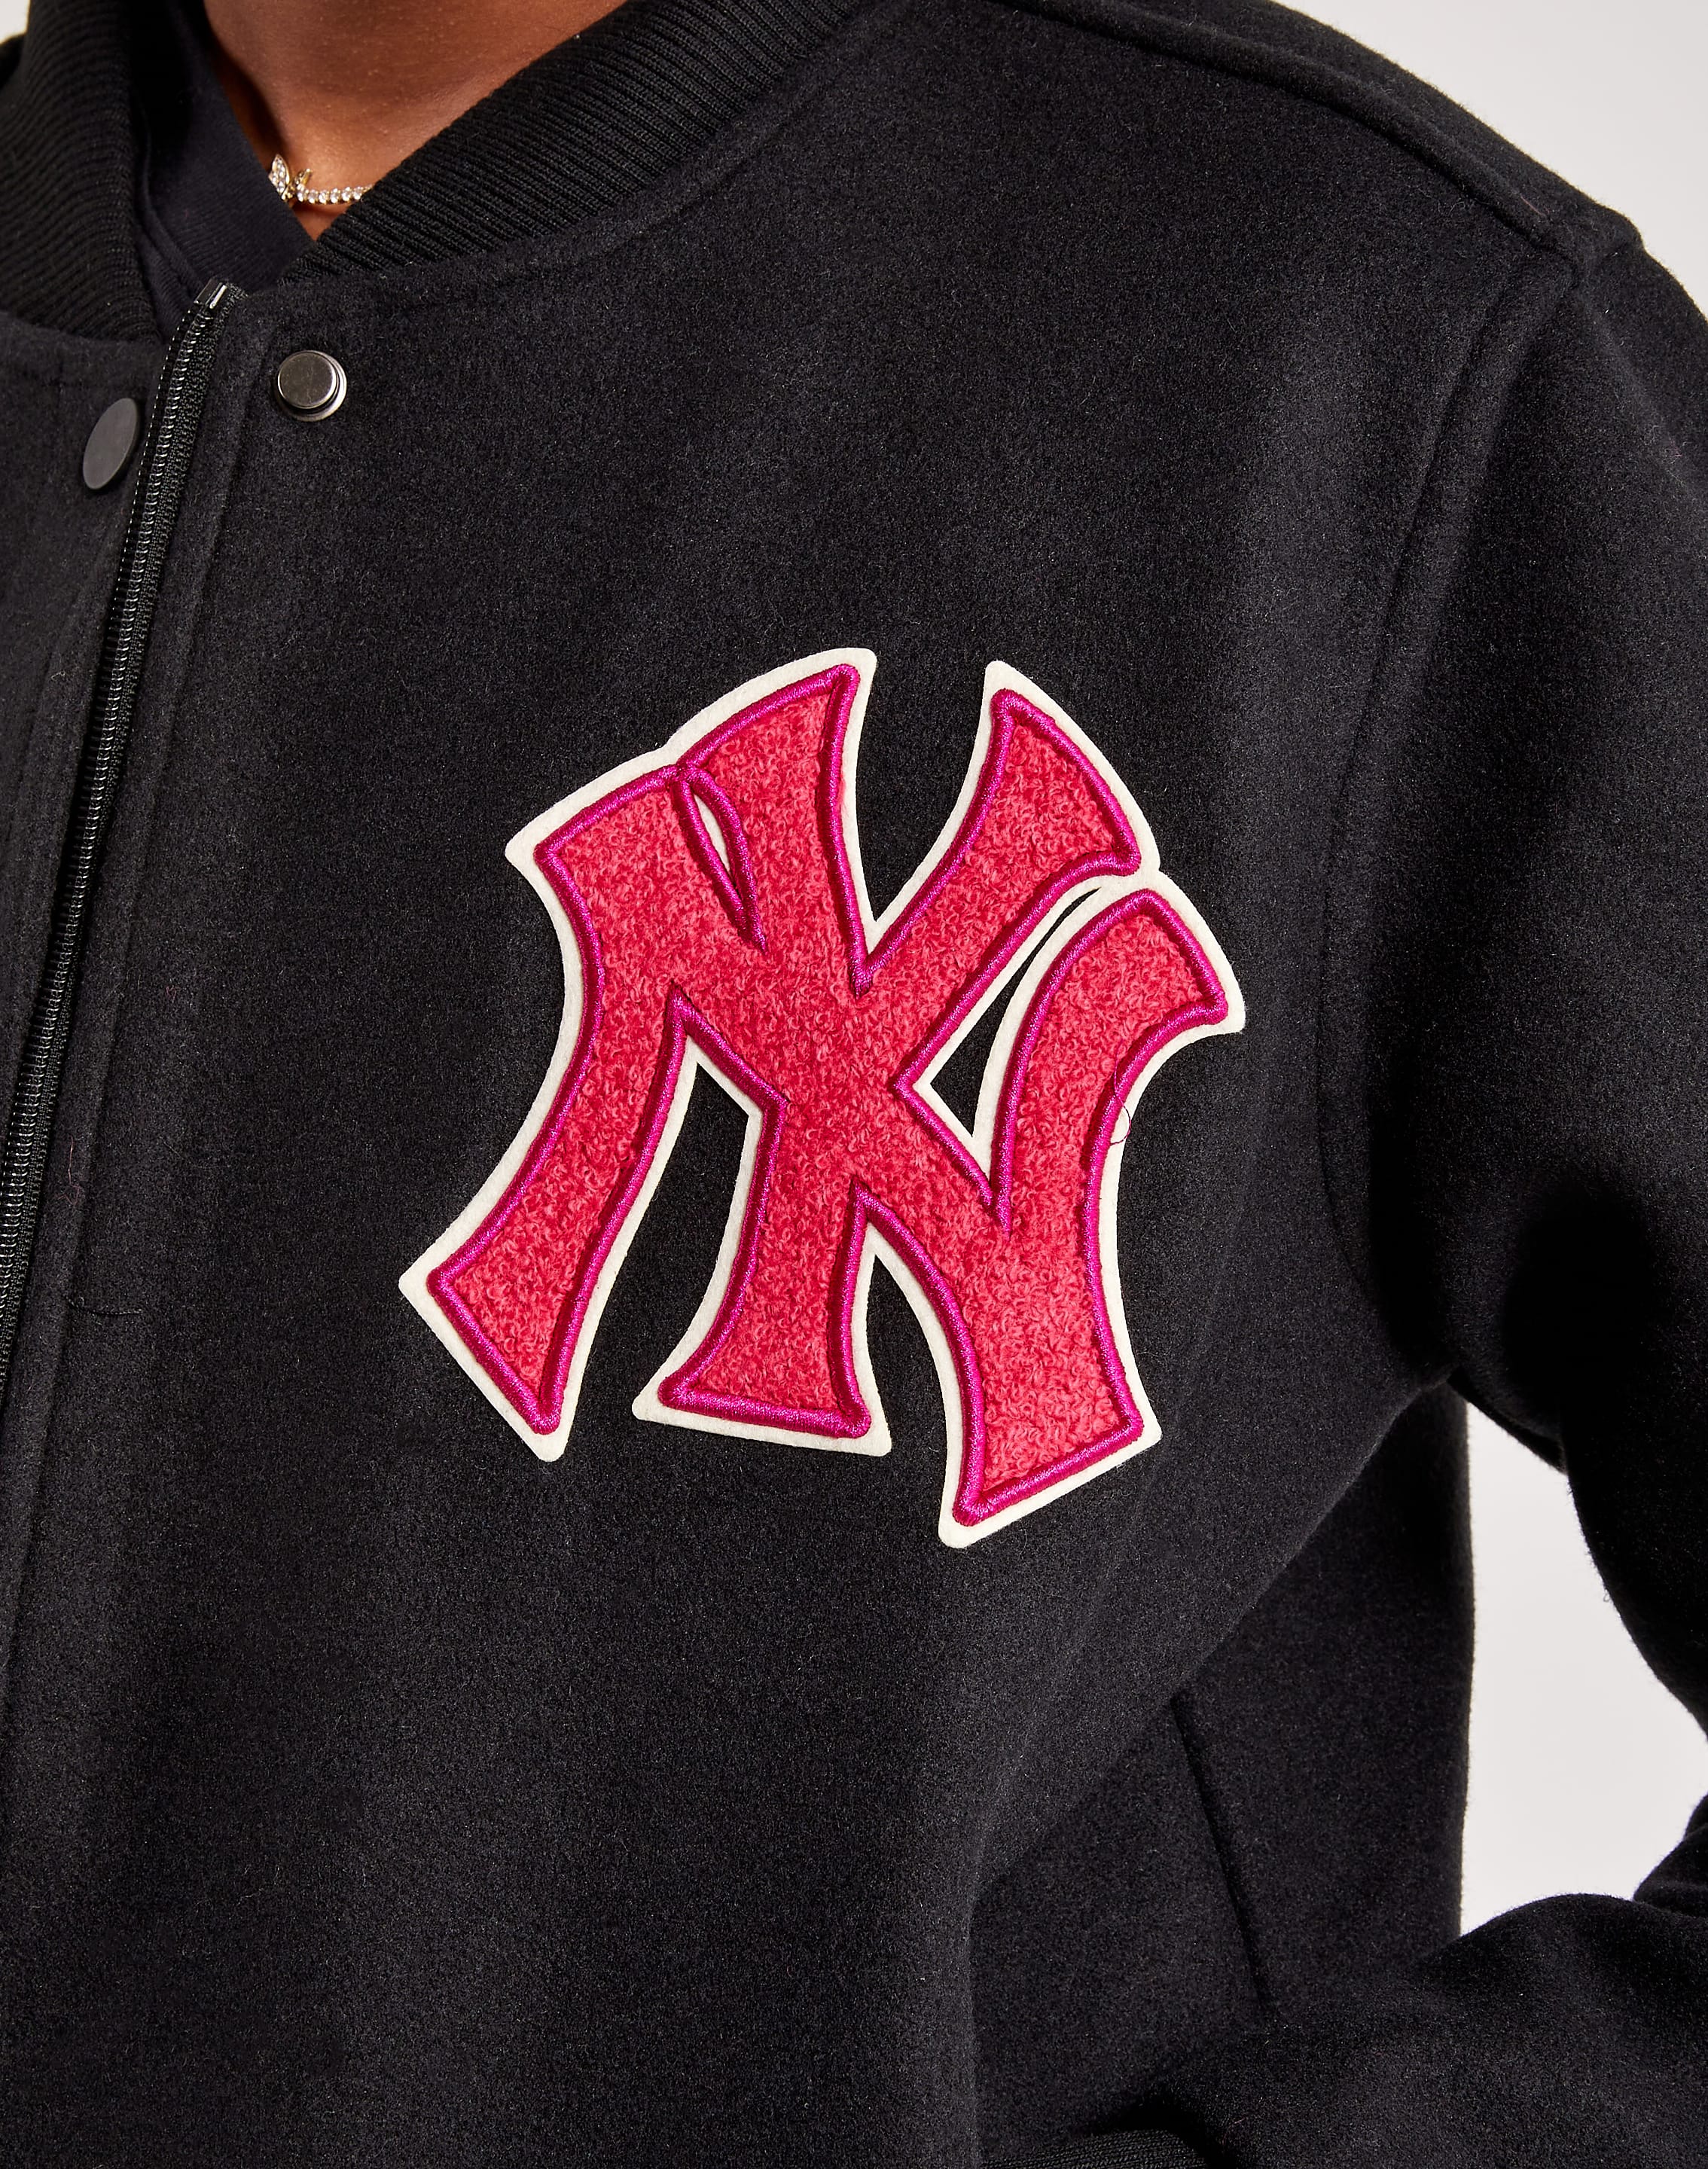 Pro Standard New York Yankees Wool Varsity Jacket